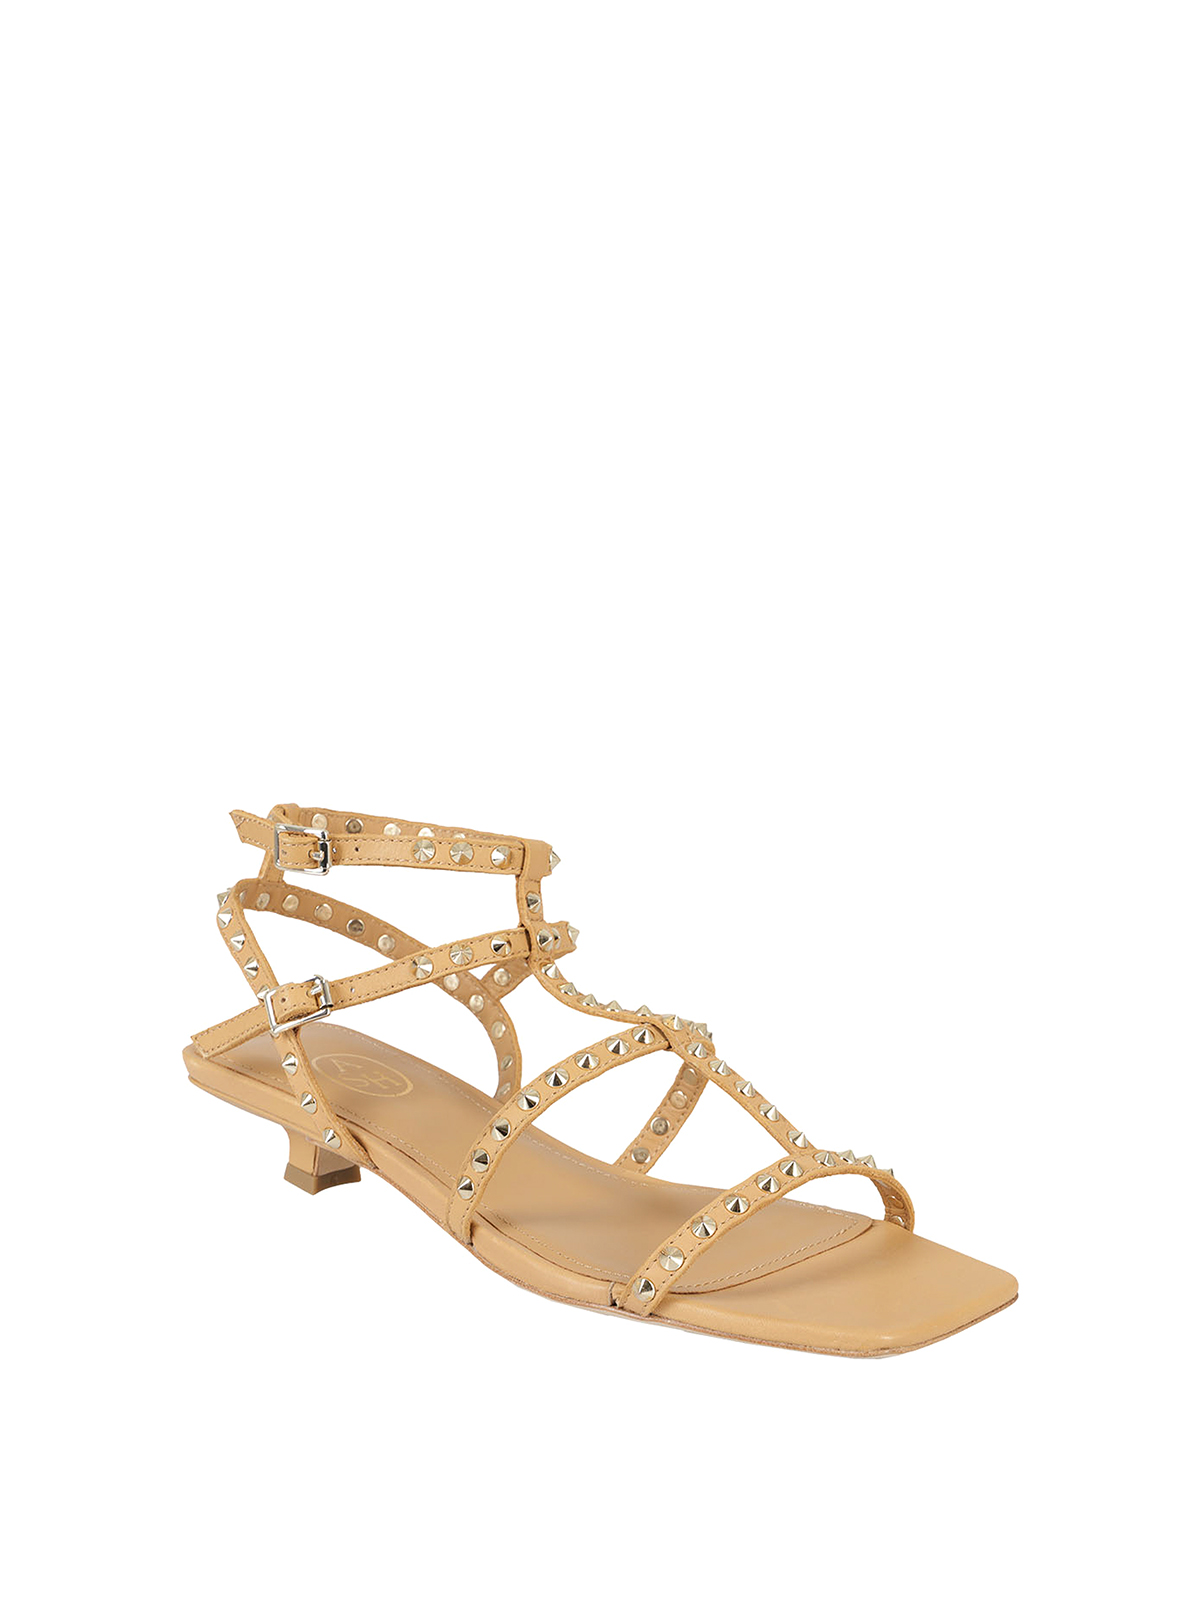 Sandals Ash - Brazil sandals - NOA02NUDE | Shop online at iKRIX